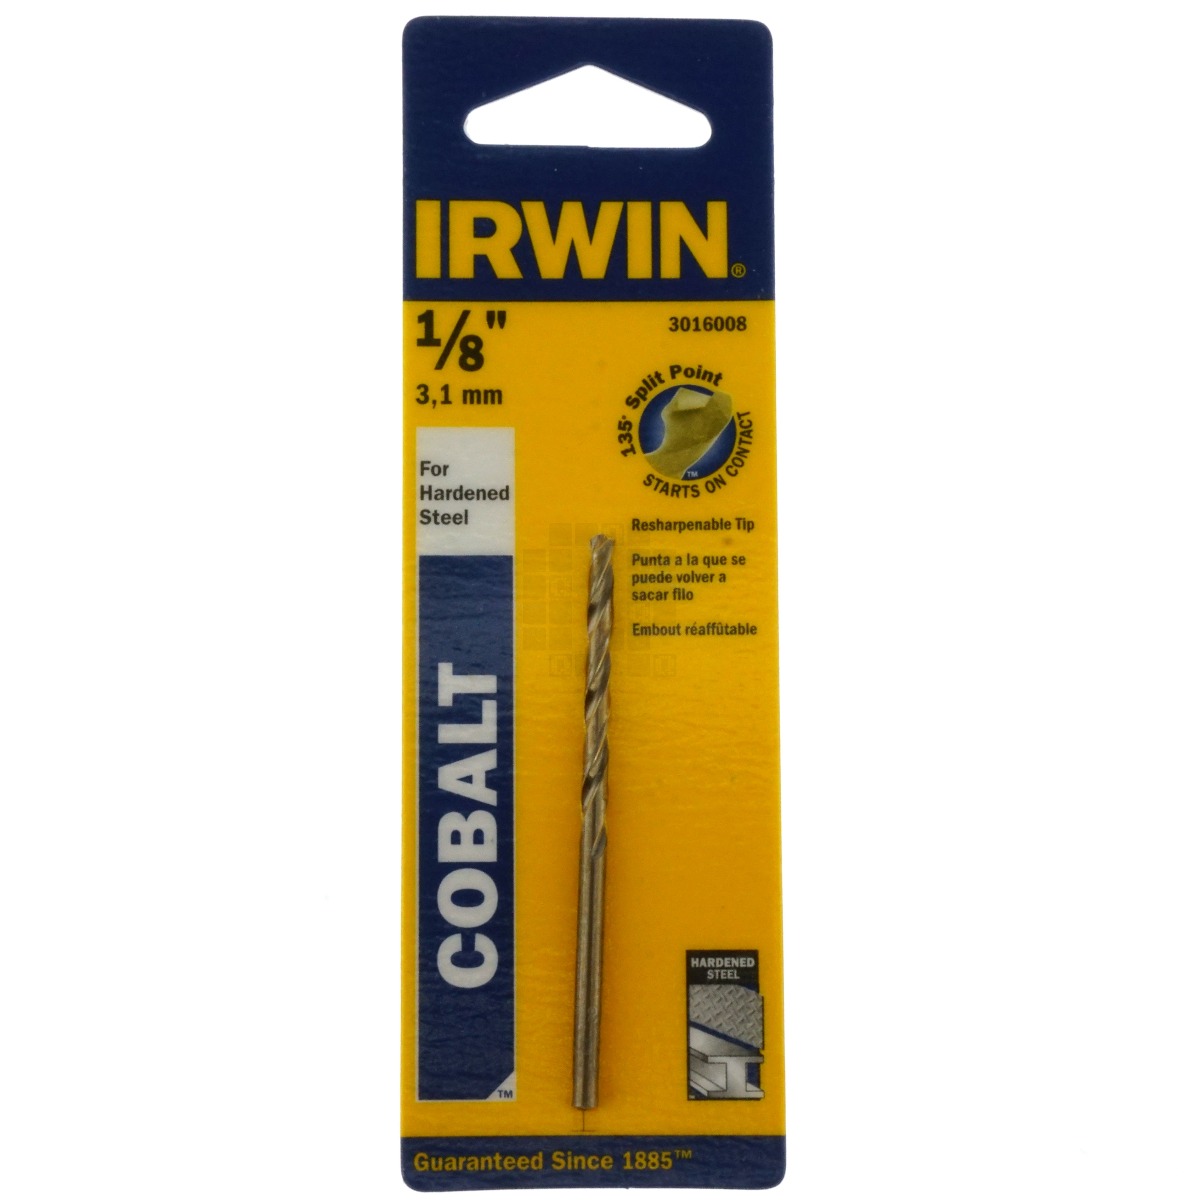 Irwin 3016008 1/8" Cobalt Drill Bit, 135° Split Point